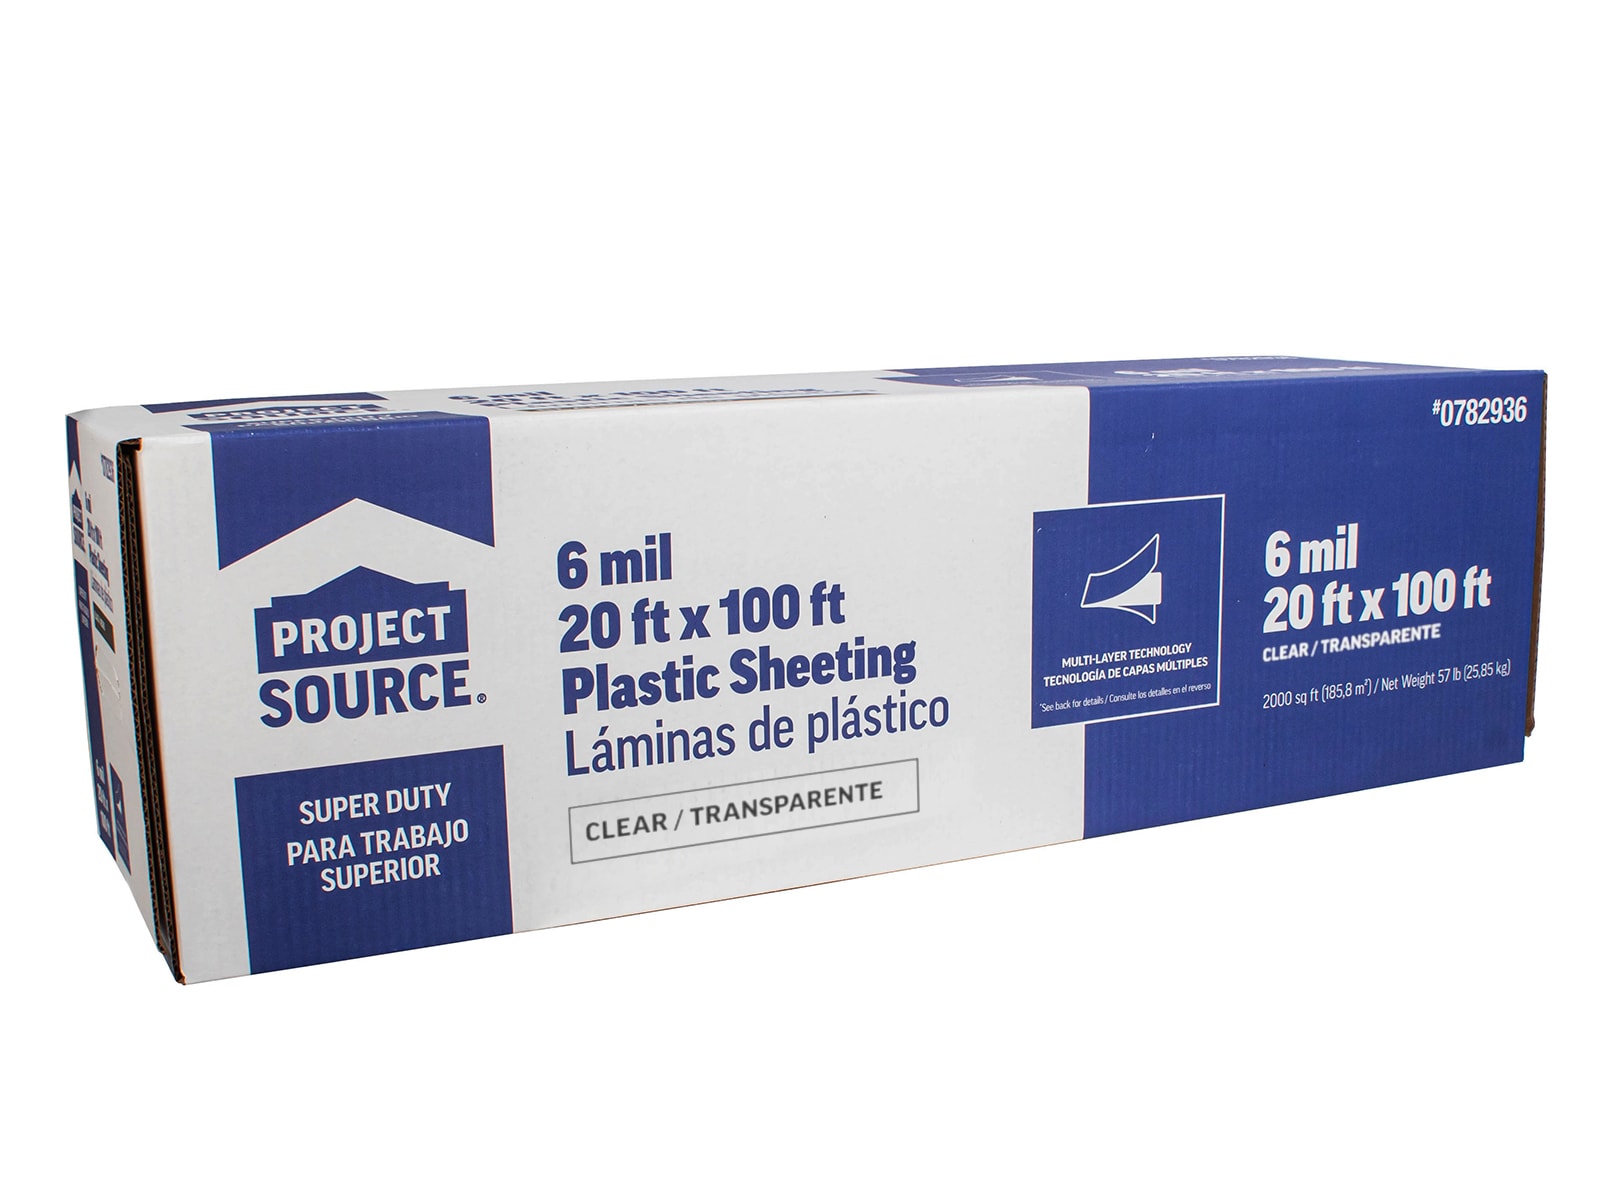 Film Transparente 20% Reciclable. Alta Calidad (CAJA 6 UNIDADES) – Retra  Pack Solutions